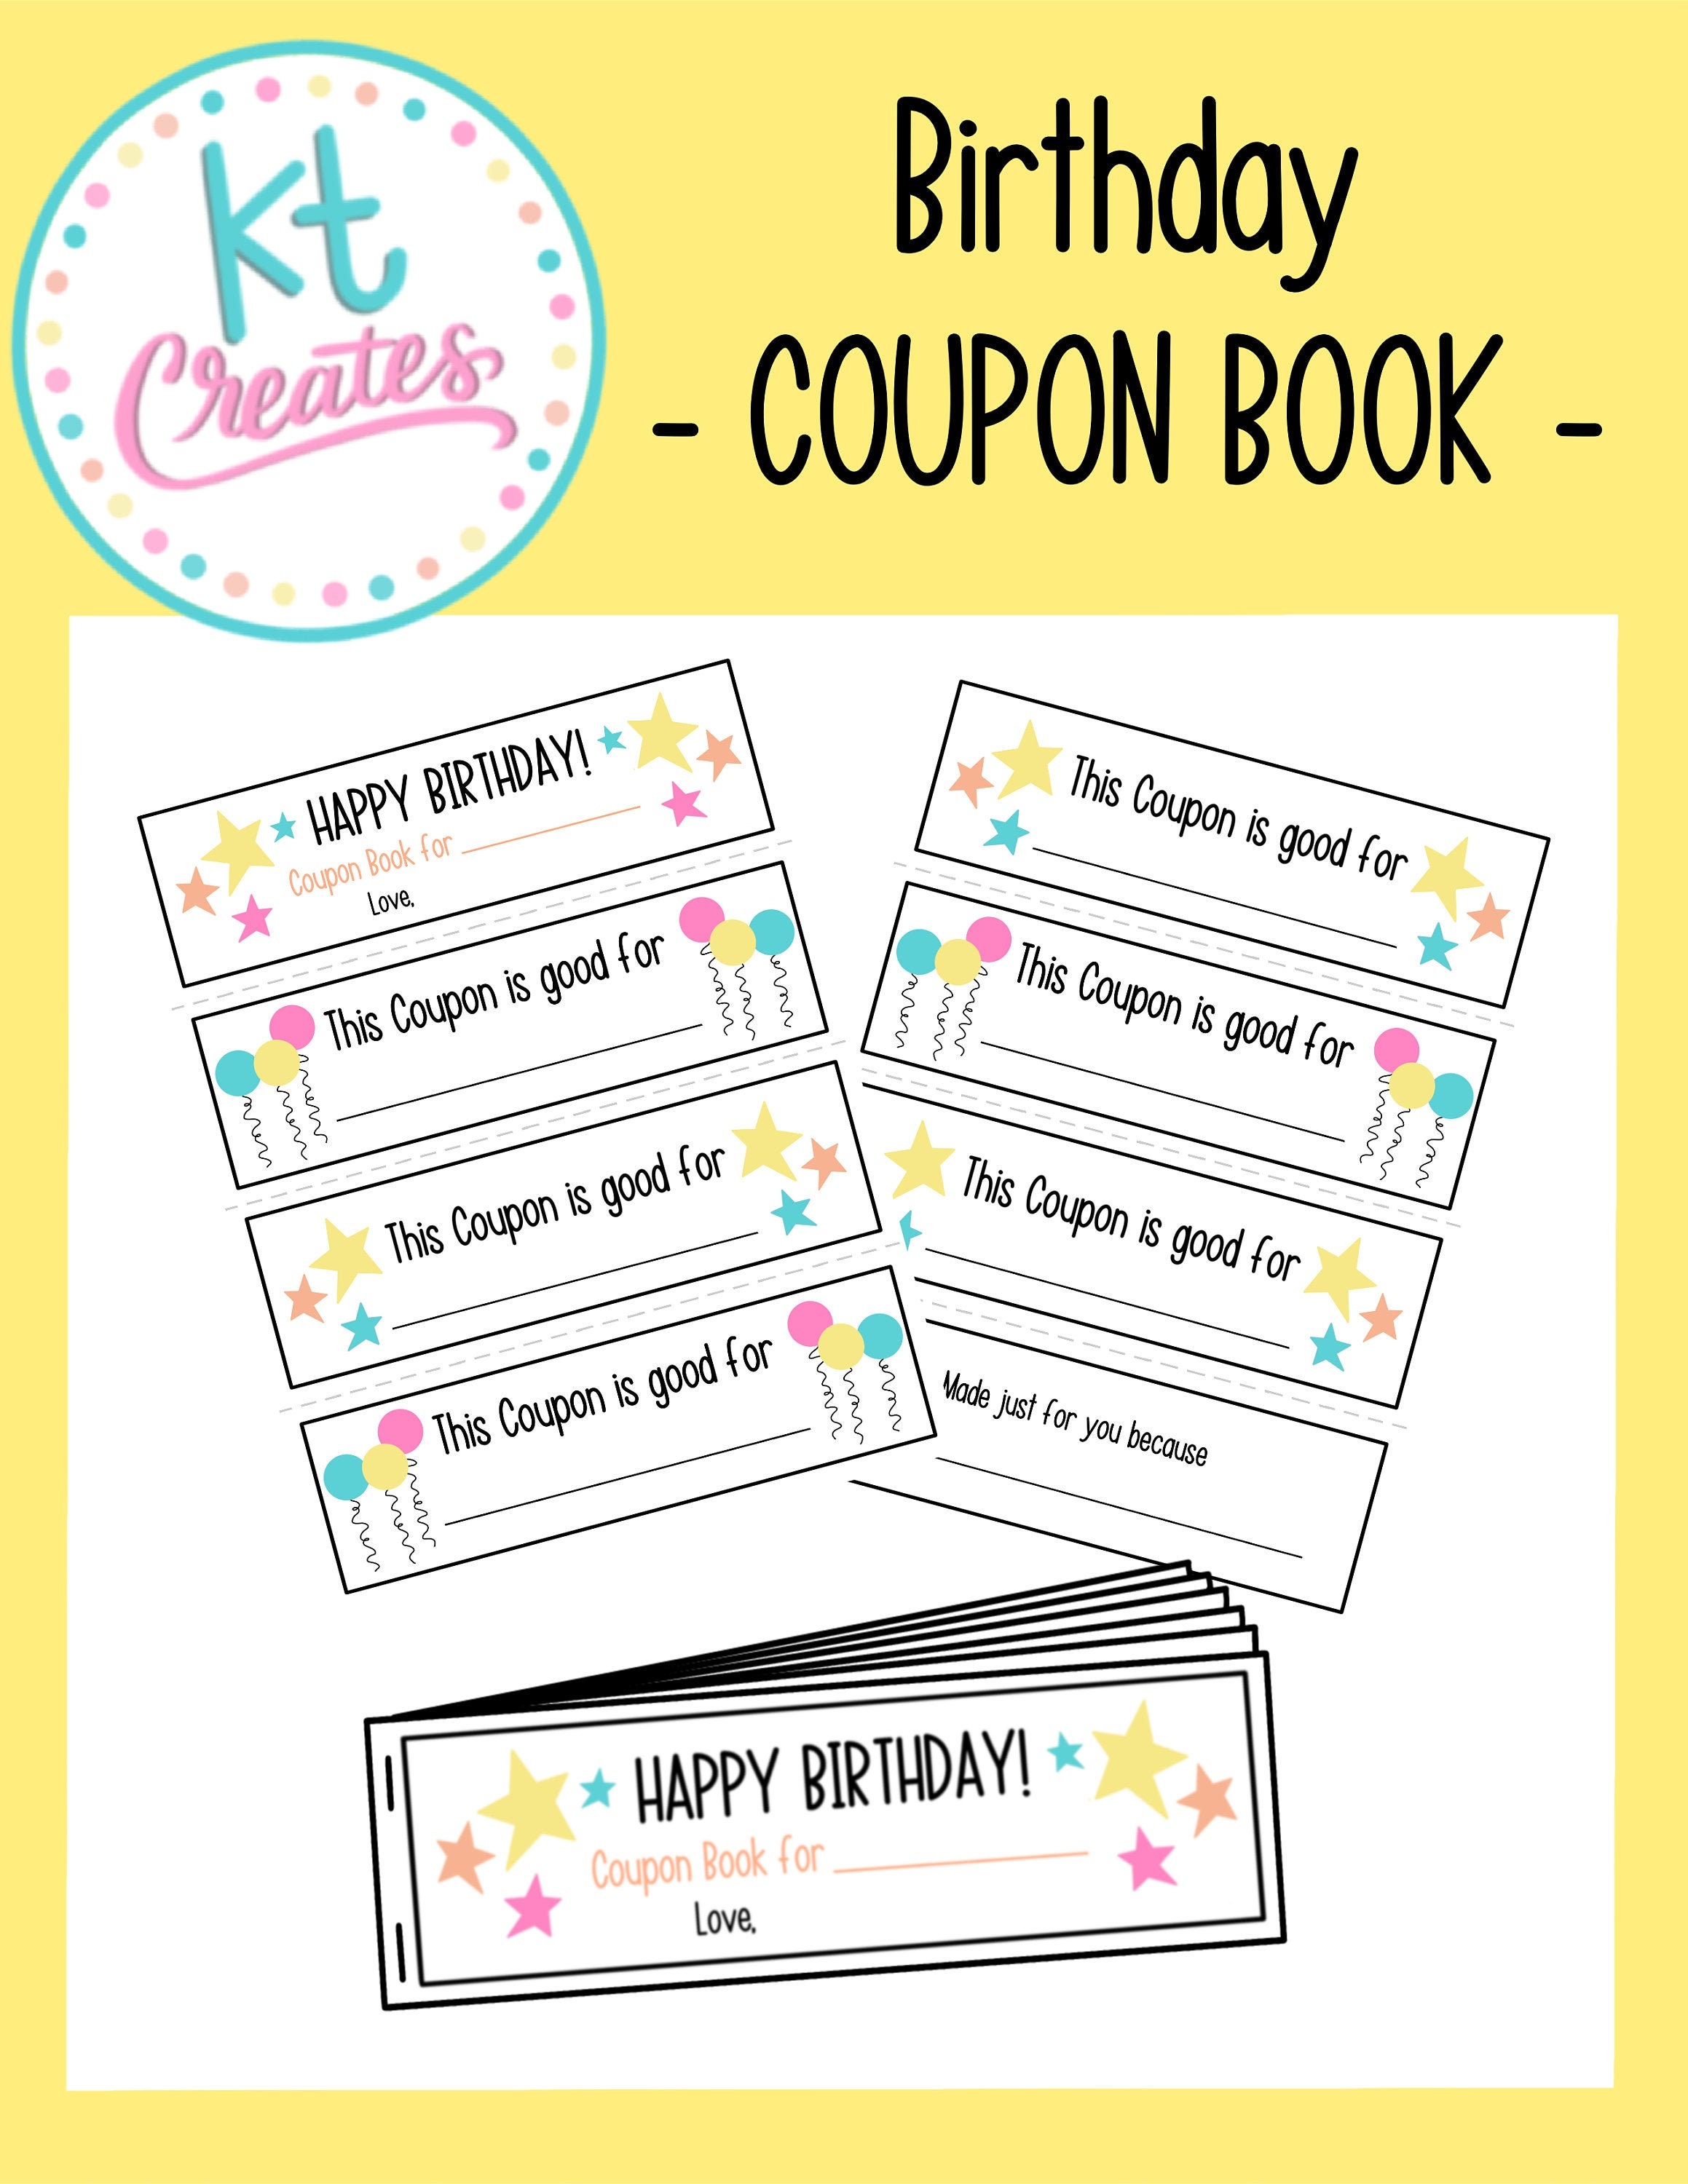 birthday-coupon-book-etsy